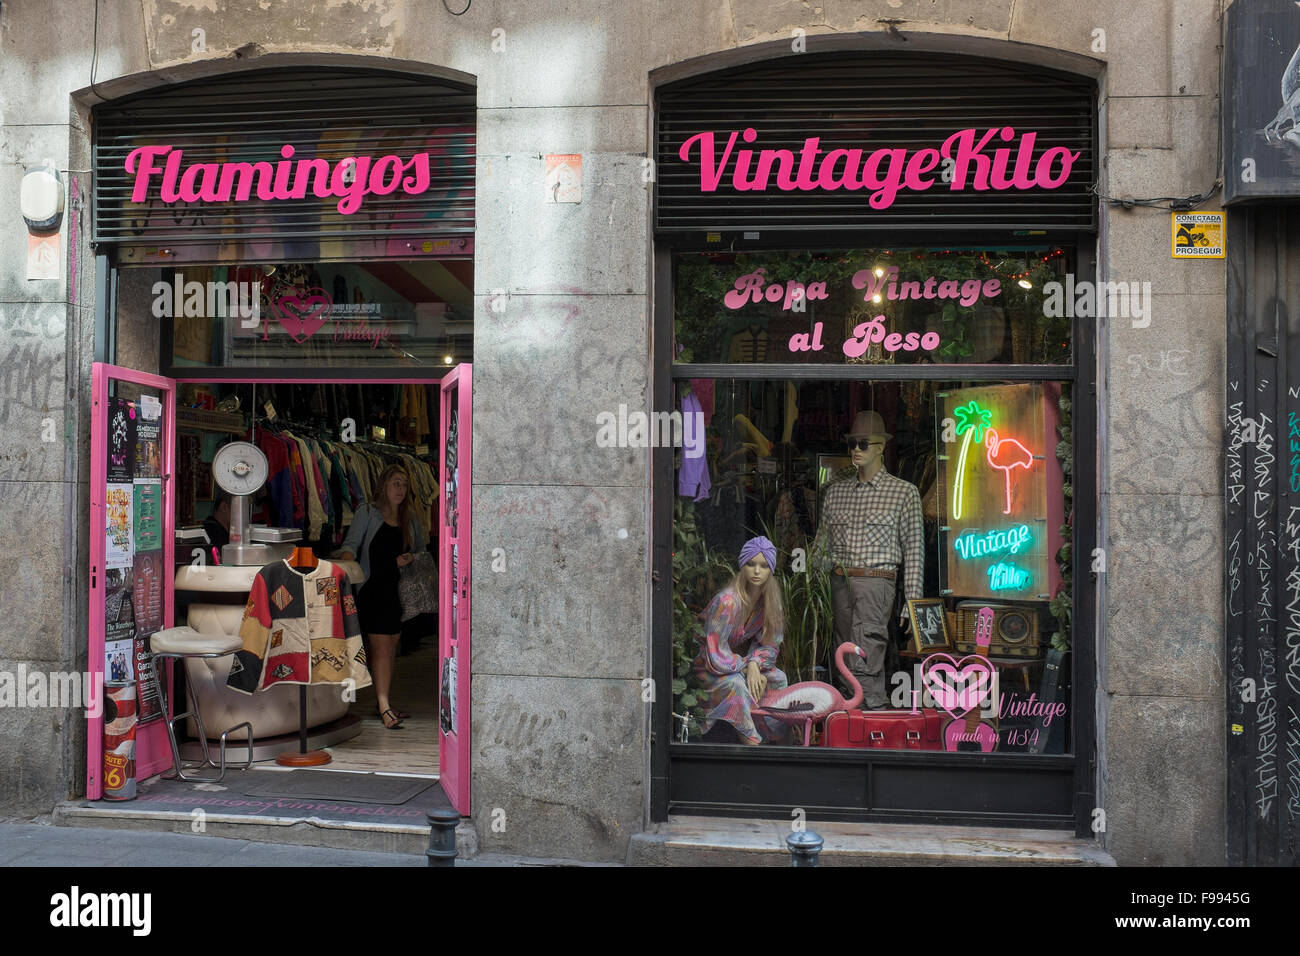 Flamingos Vintage Kilo tienda de moda Fotografía de stock - Alamy